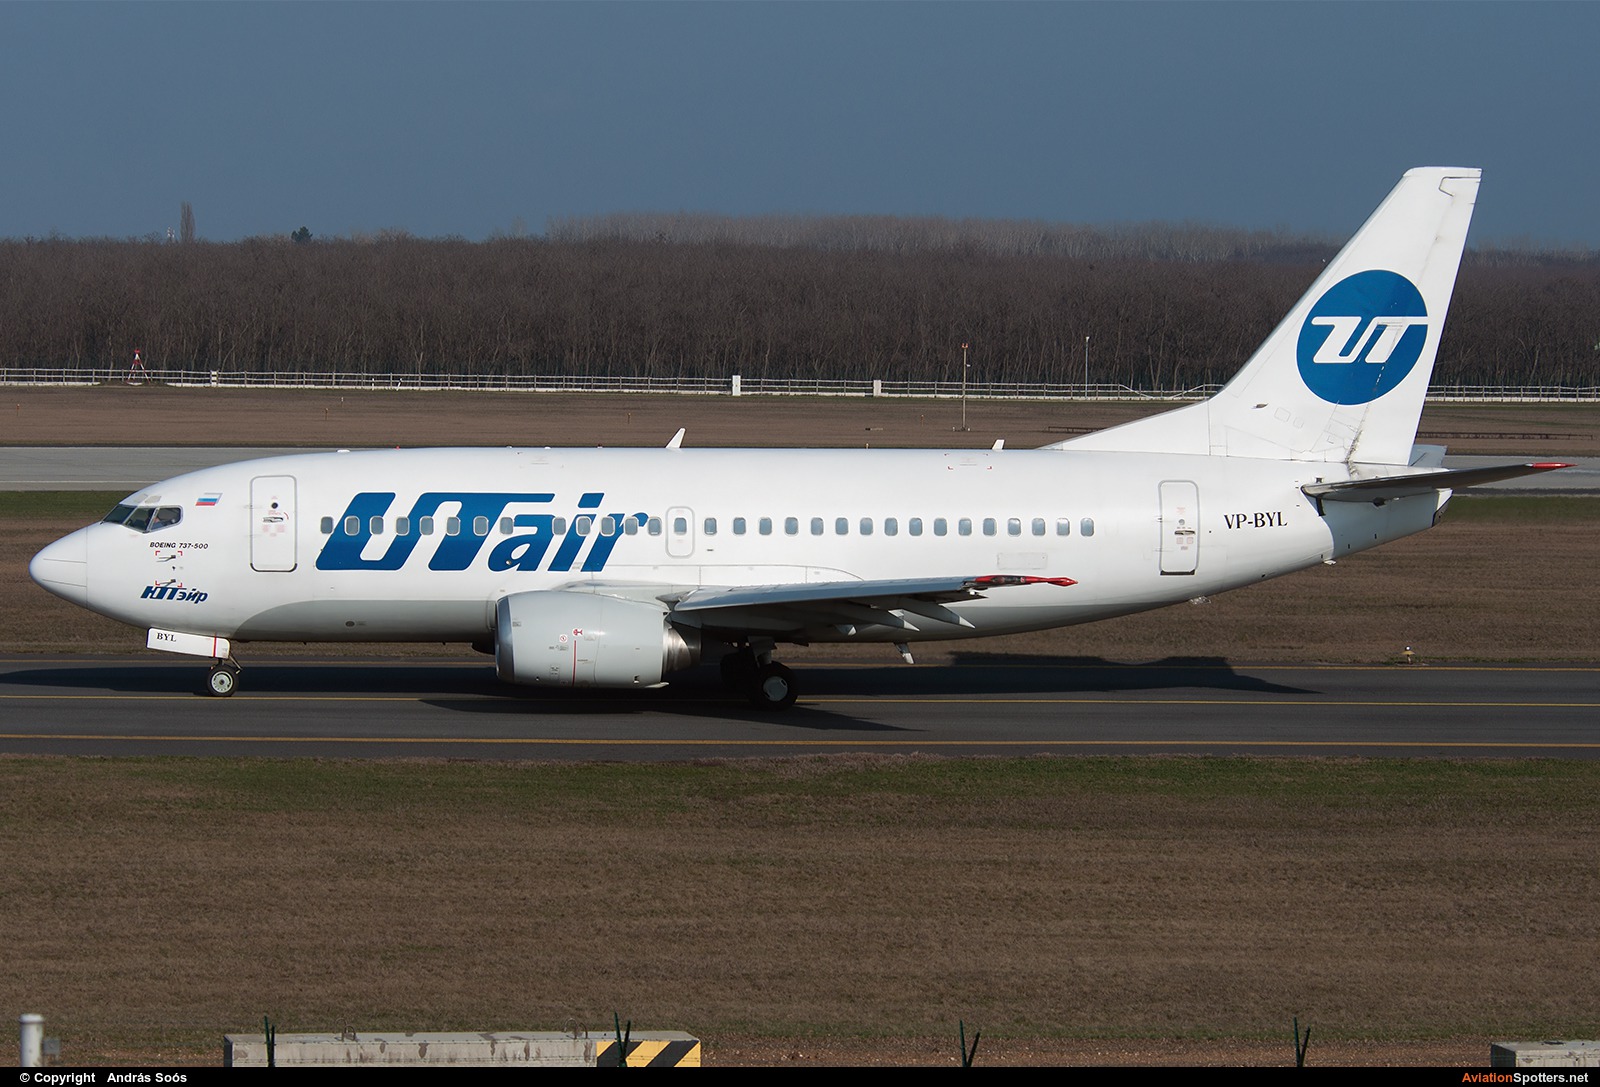 UTair  -  737-500  (VP-BYL) By András Soós (sas1965)